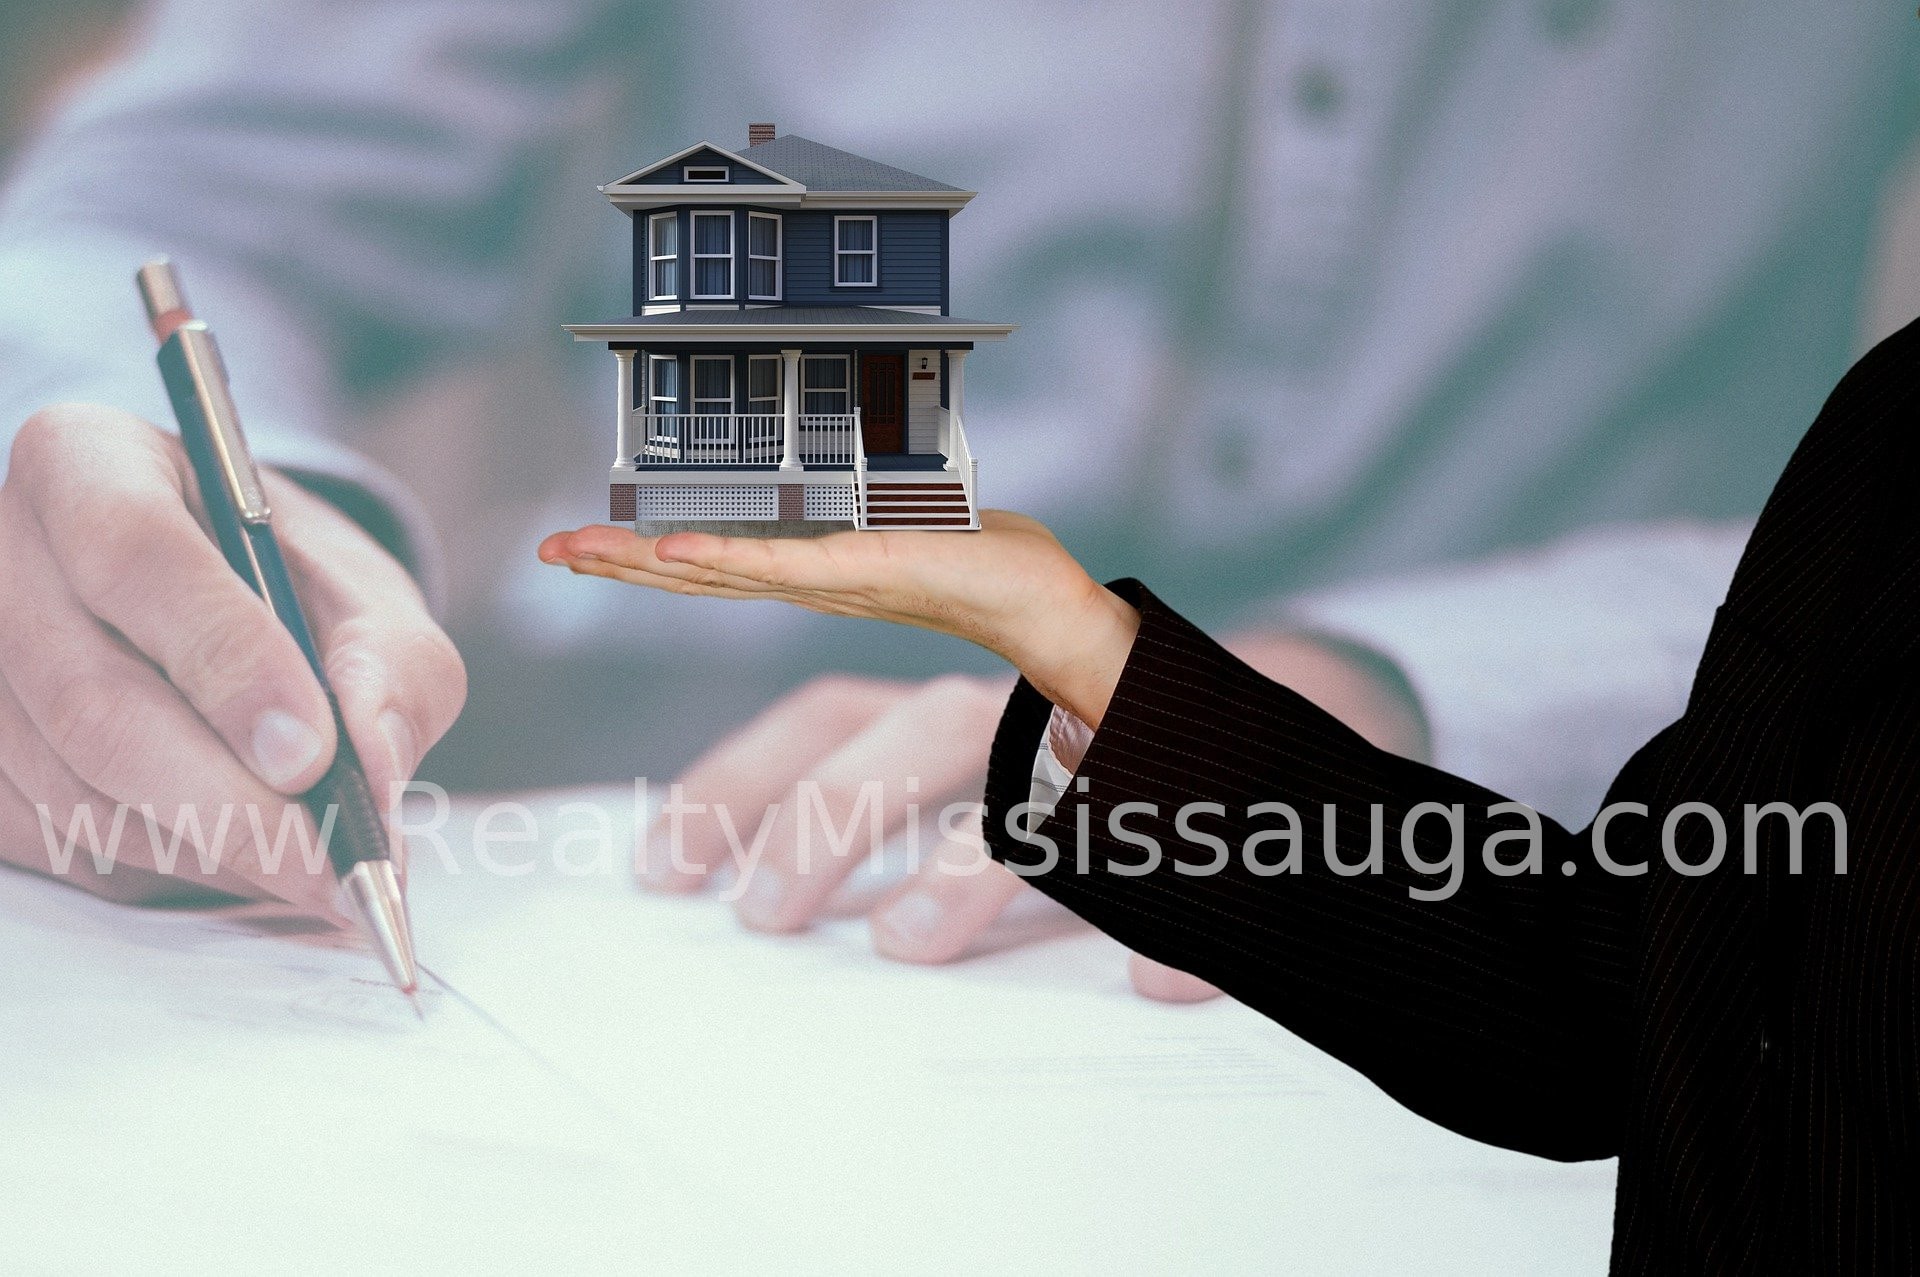 Property Brokerage service in Mississauga